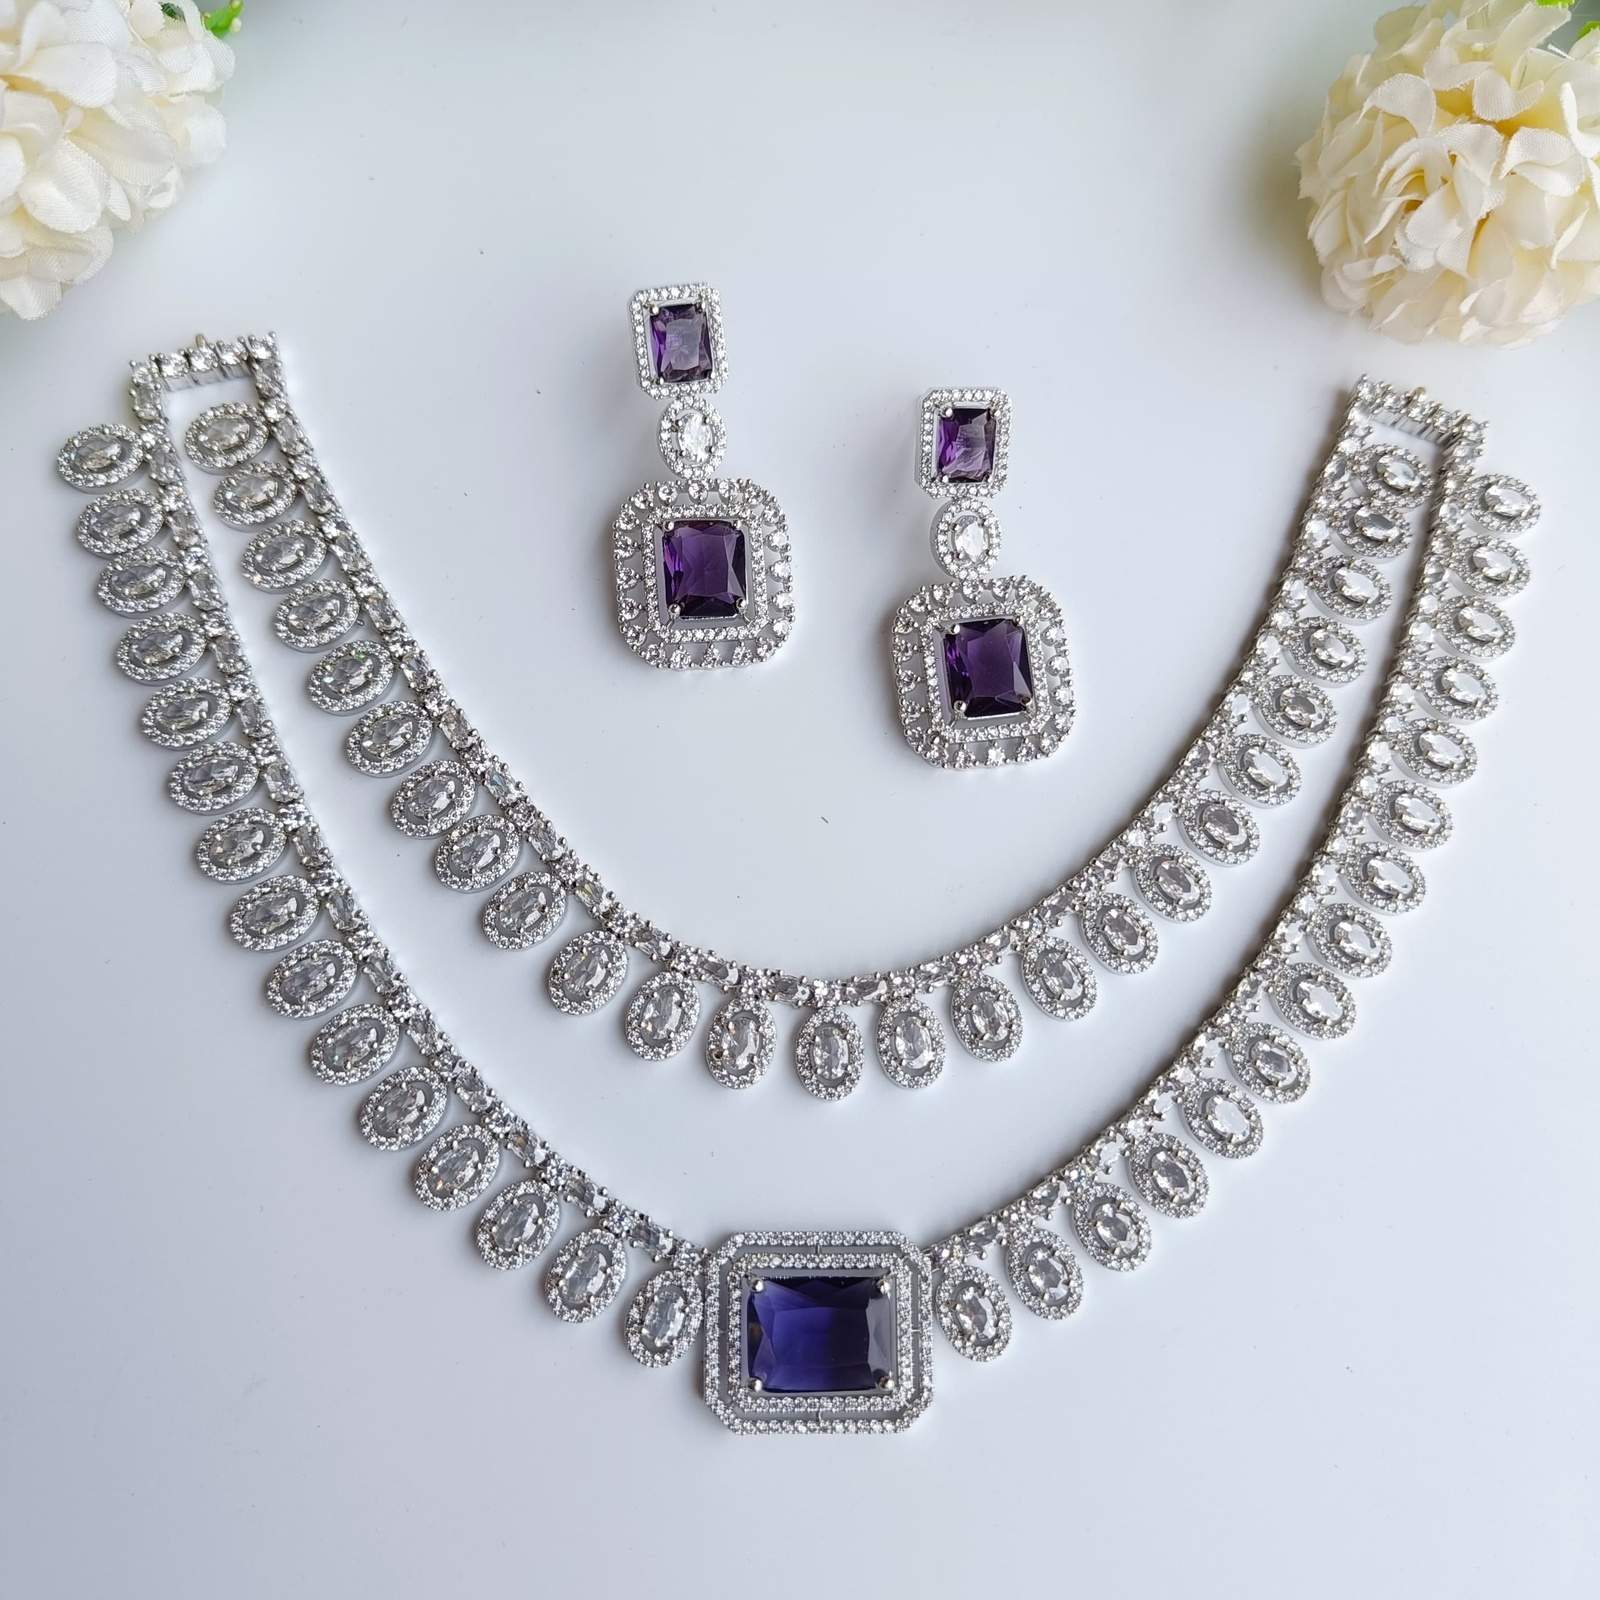 Inaya ad neckpiece - purple